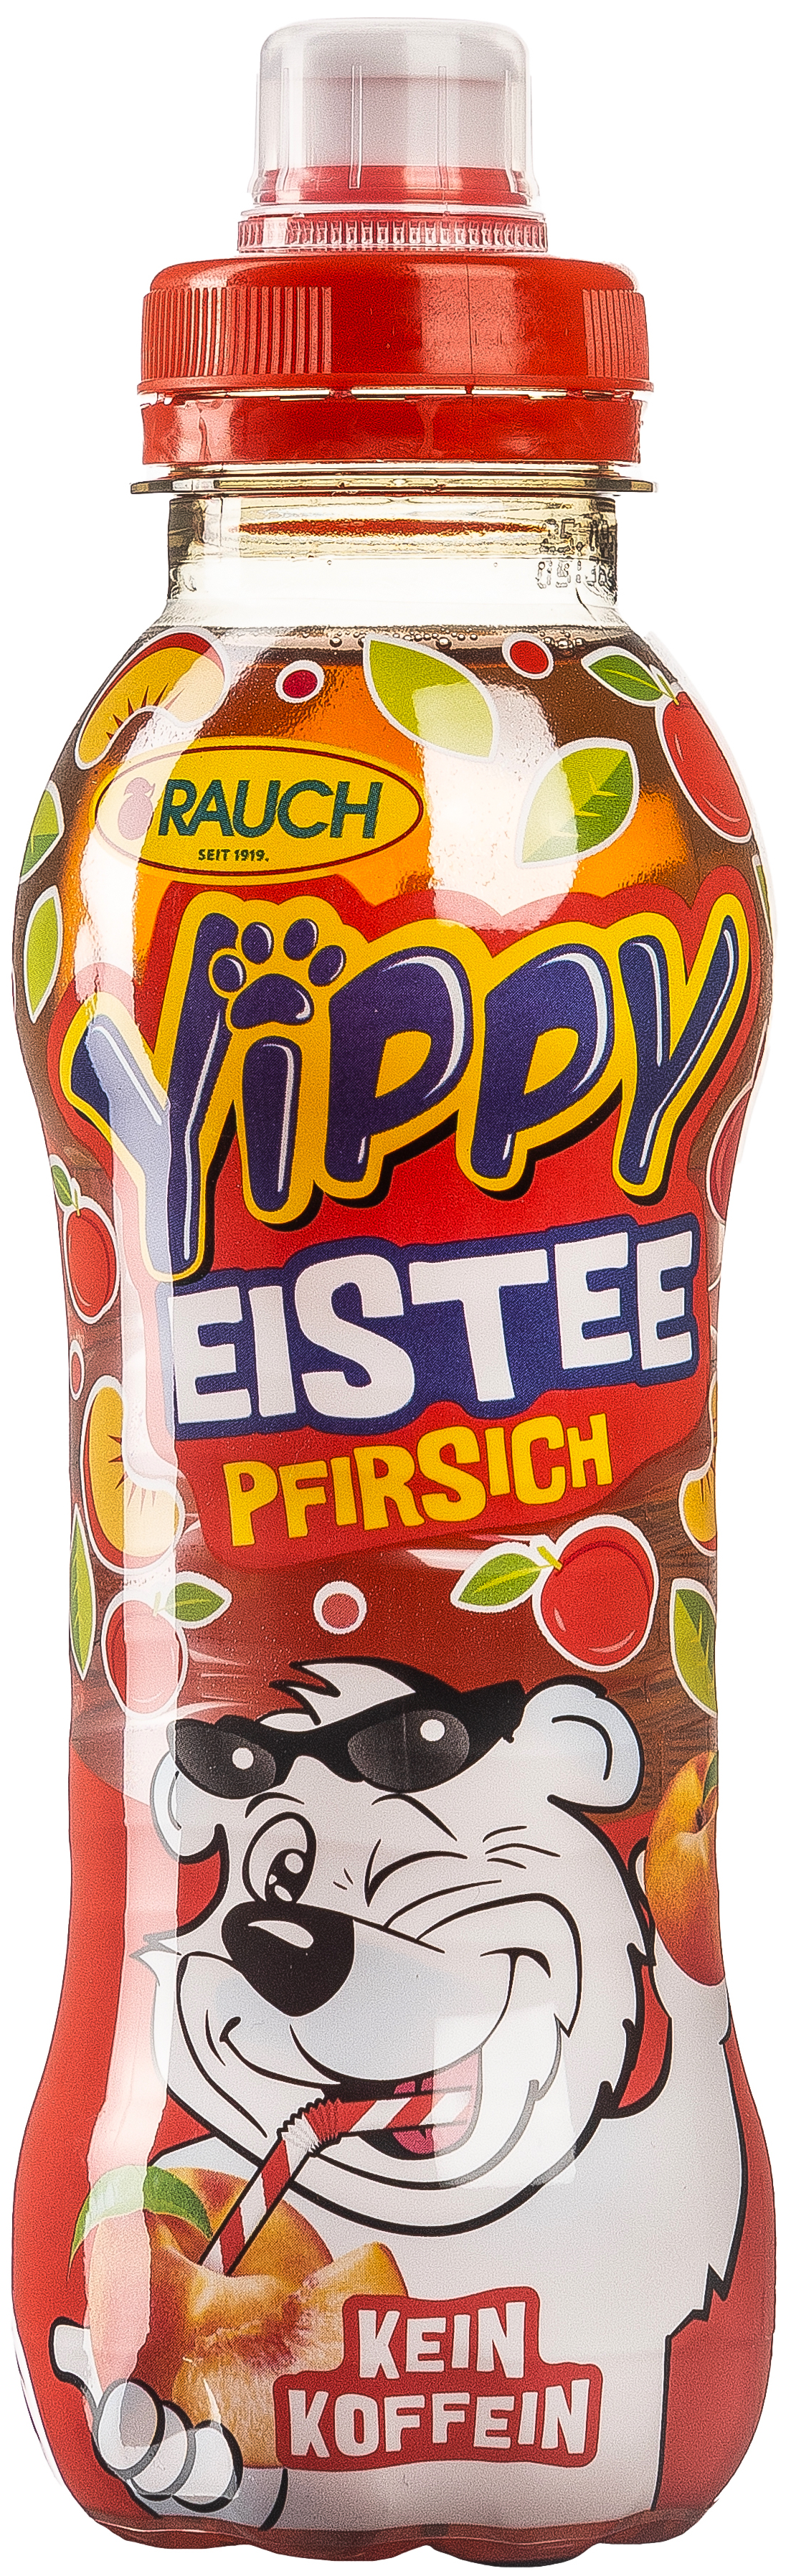 Yippy Eistee Pfirsich 0,33L EINWEG